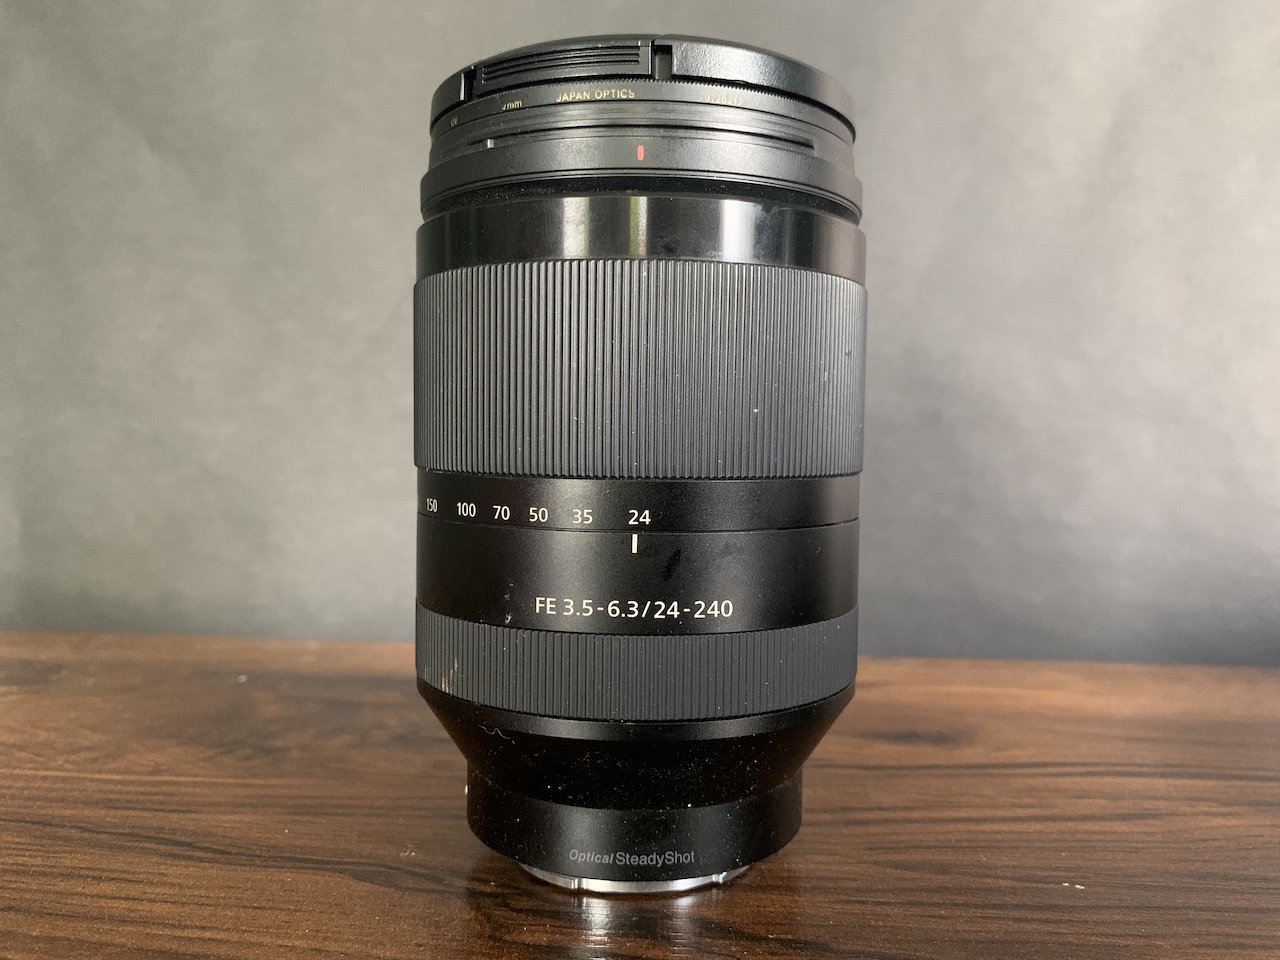 Sony 24-240mm Lens - A very versatile option